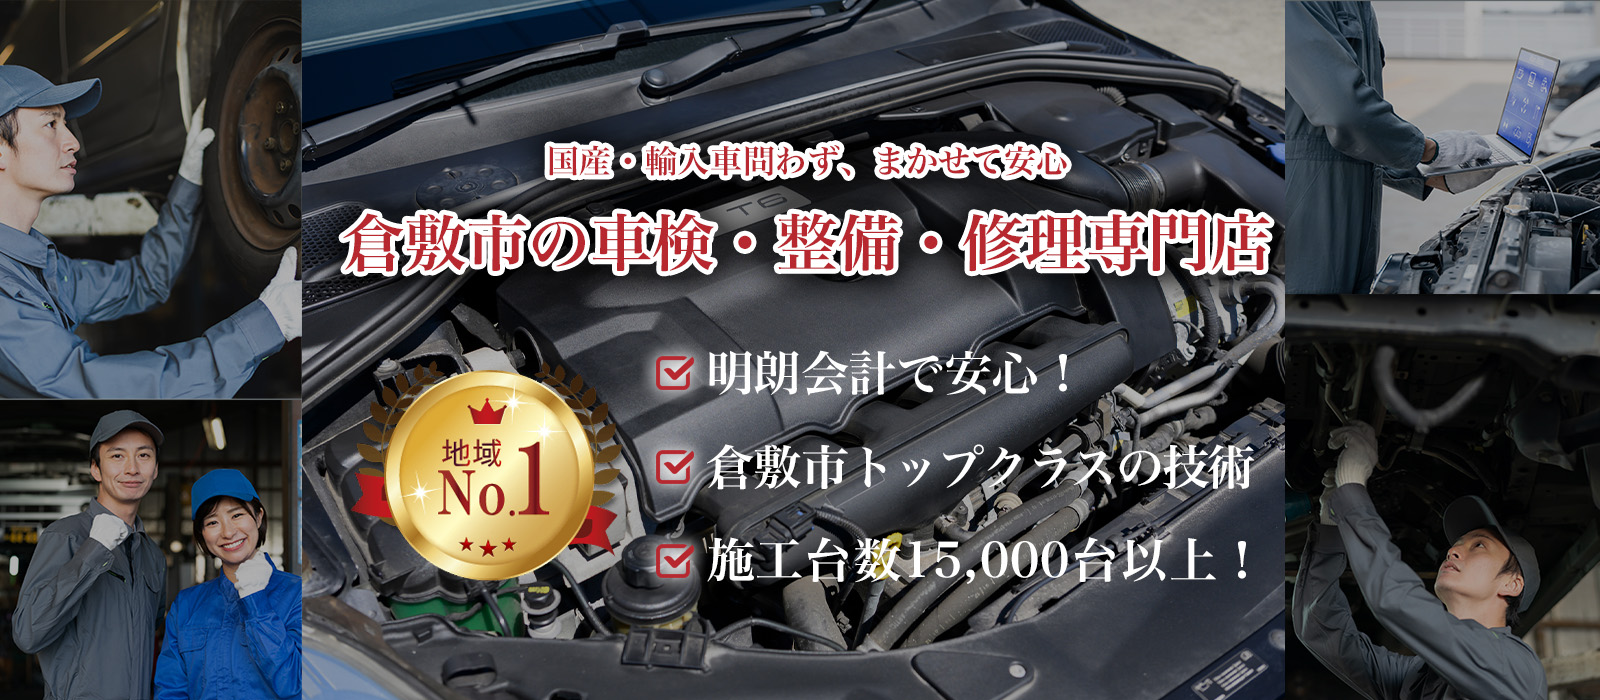 FK GARAGE | あらゆる国産・輸入車の整備・車検・修理は岡山県倉敷市・FK GARAGEにお任せください